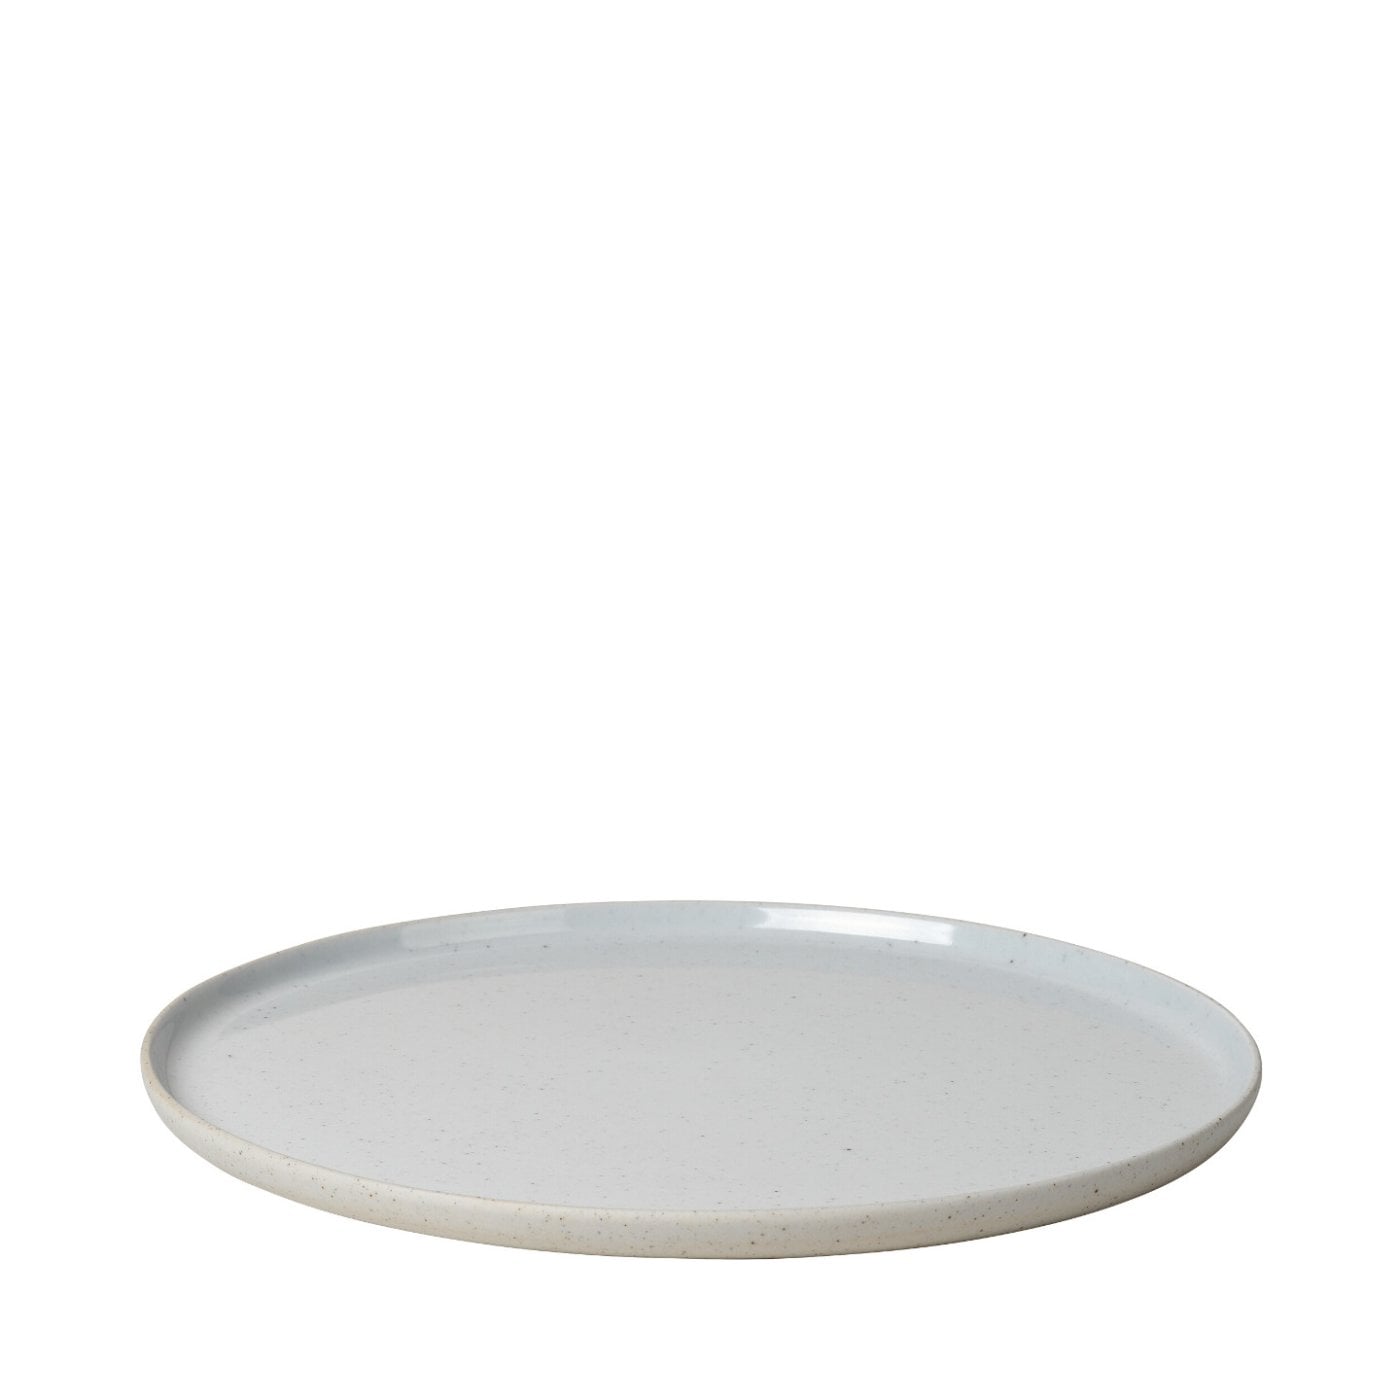 SABLO Dinner Plate 260 mm / 10 in